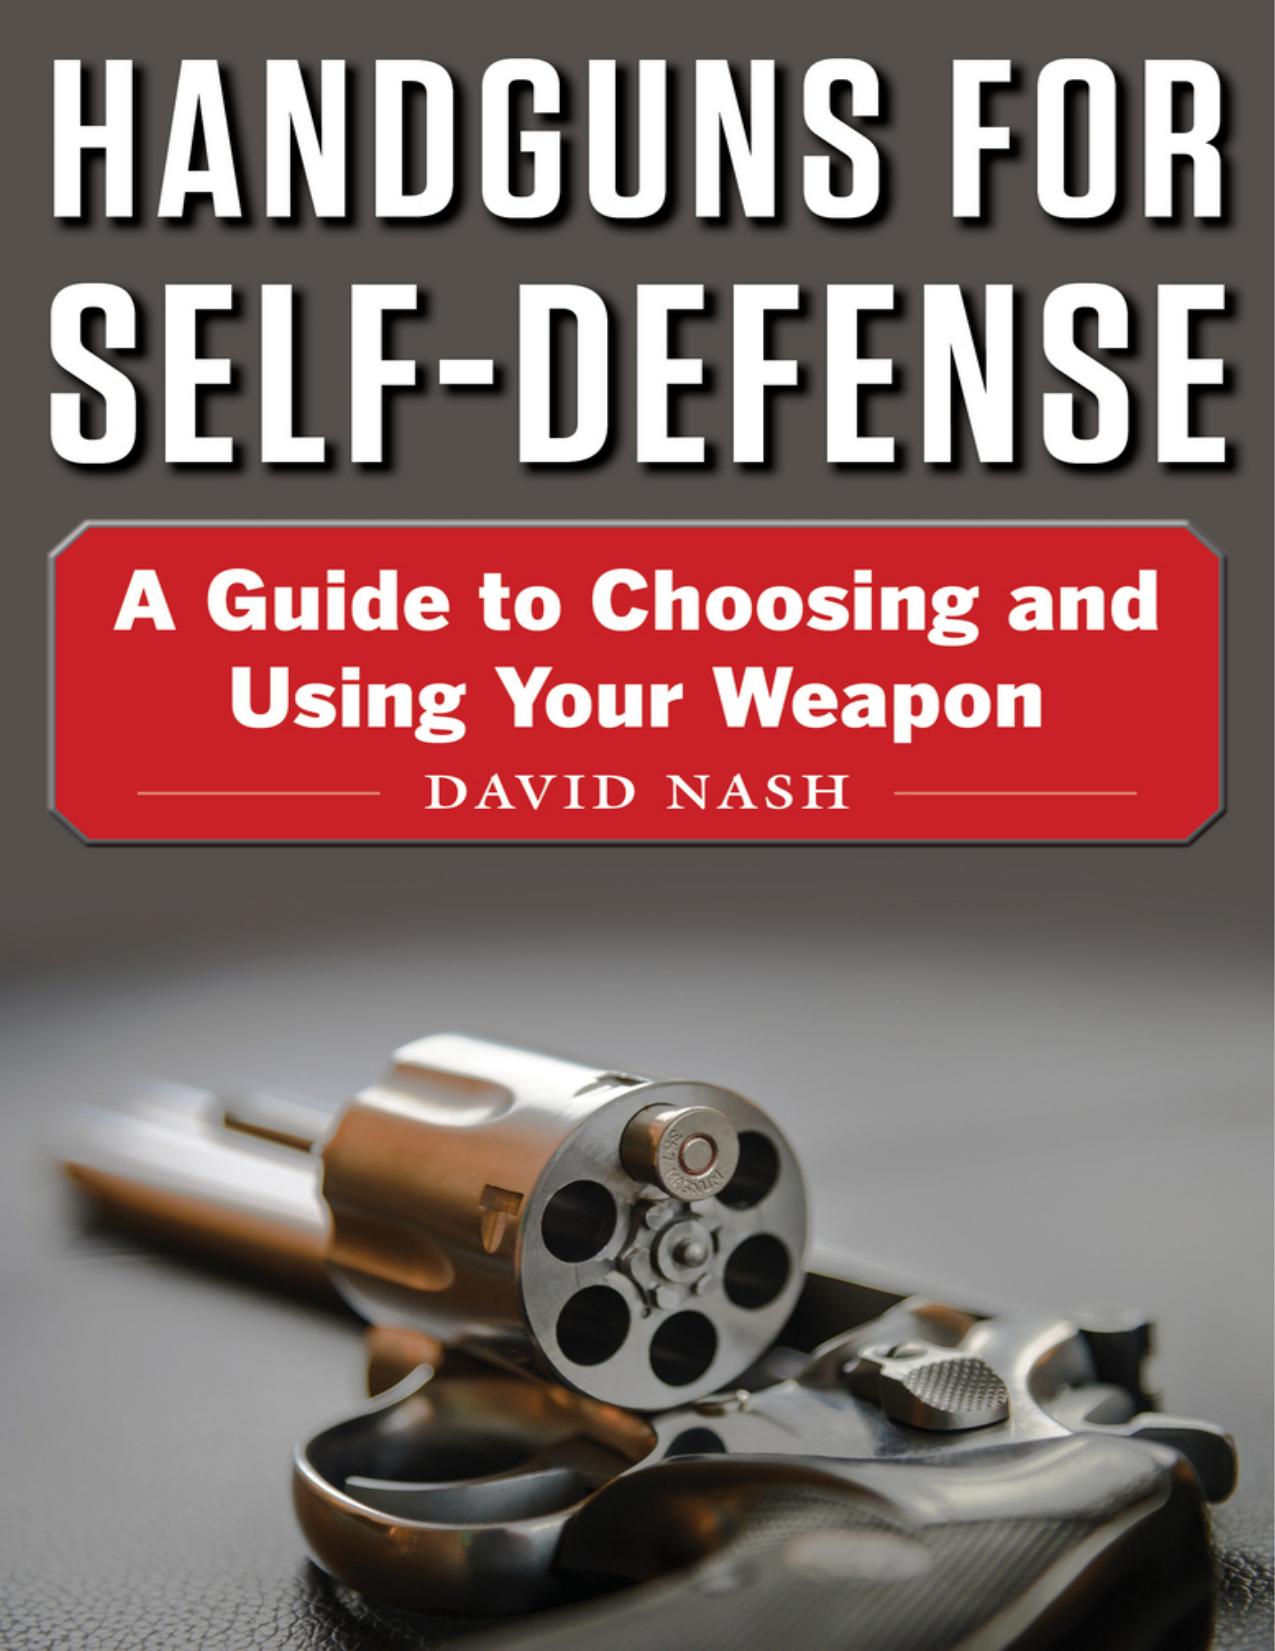 Handguns for Self-Defense by David Nash